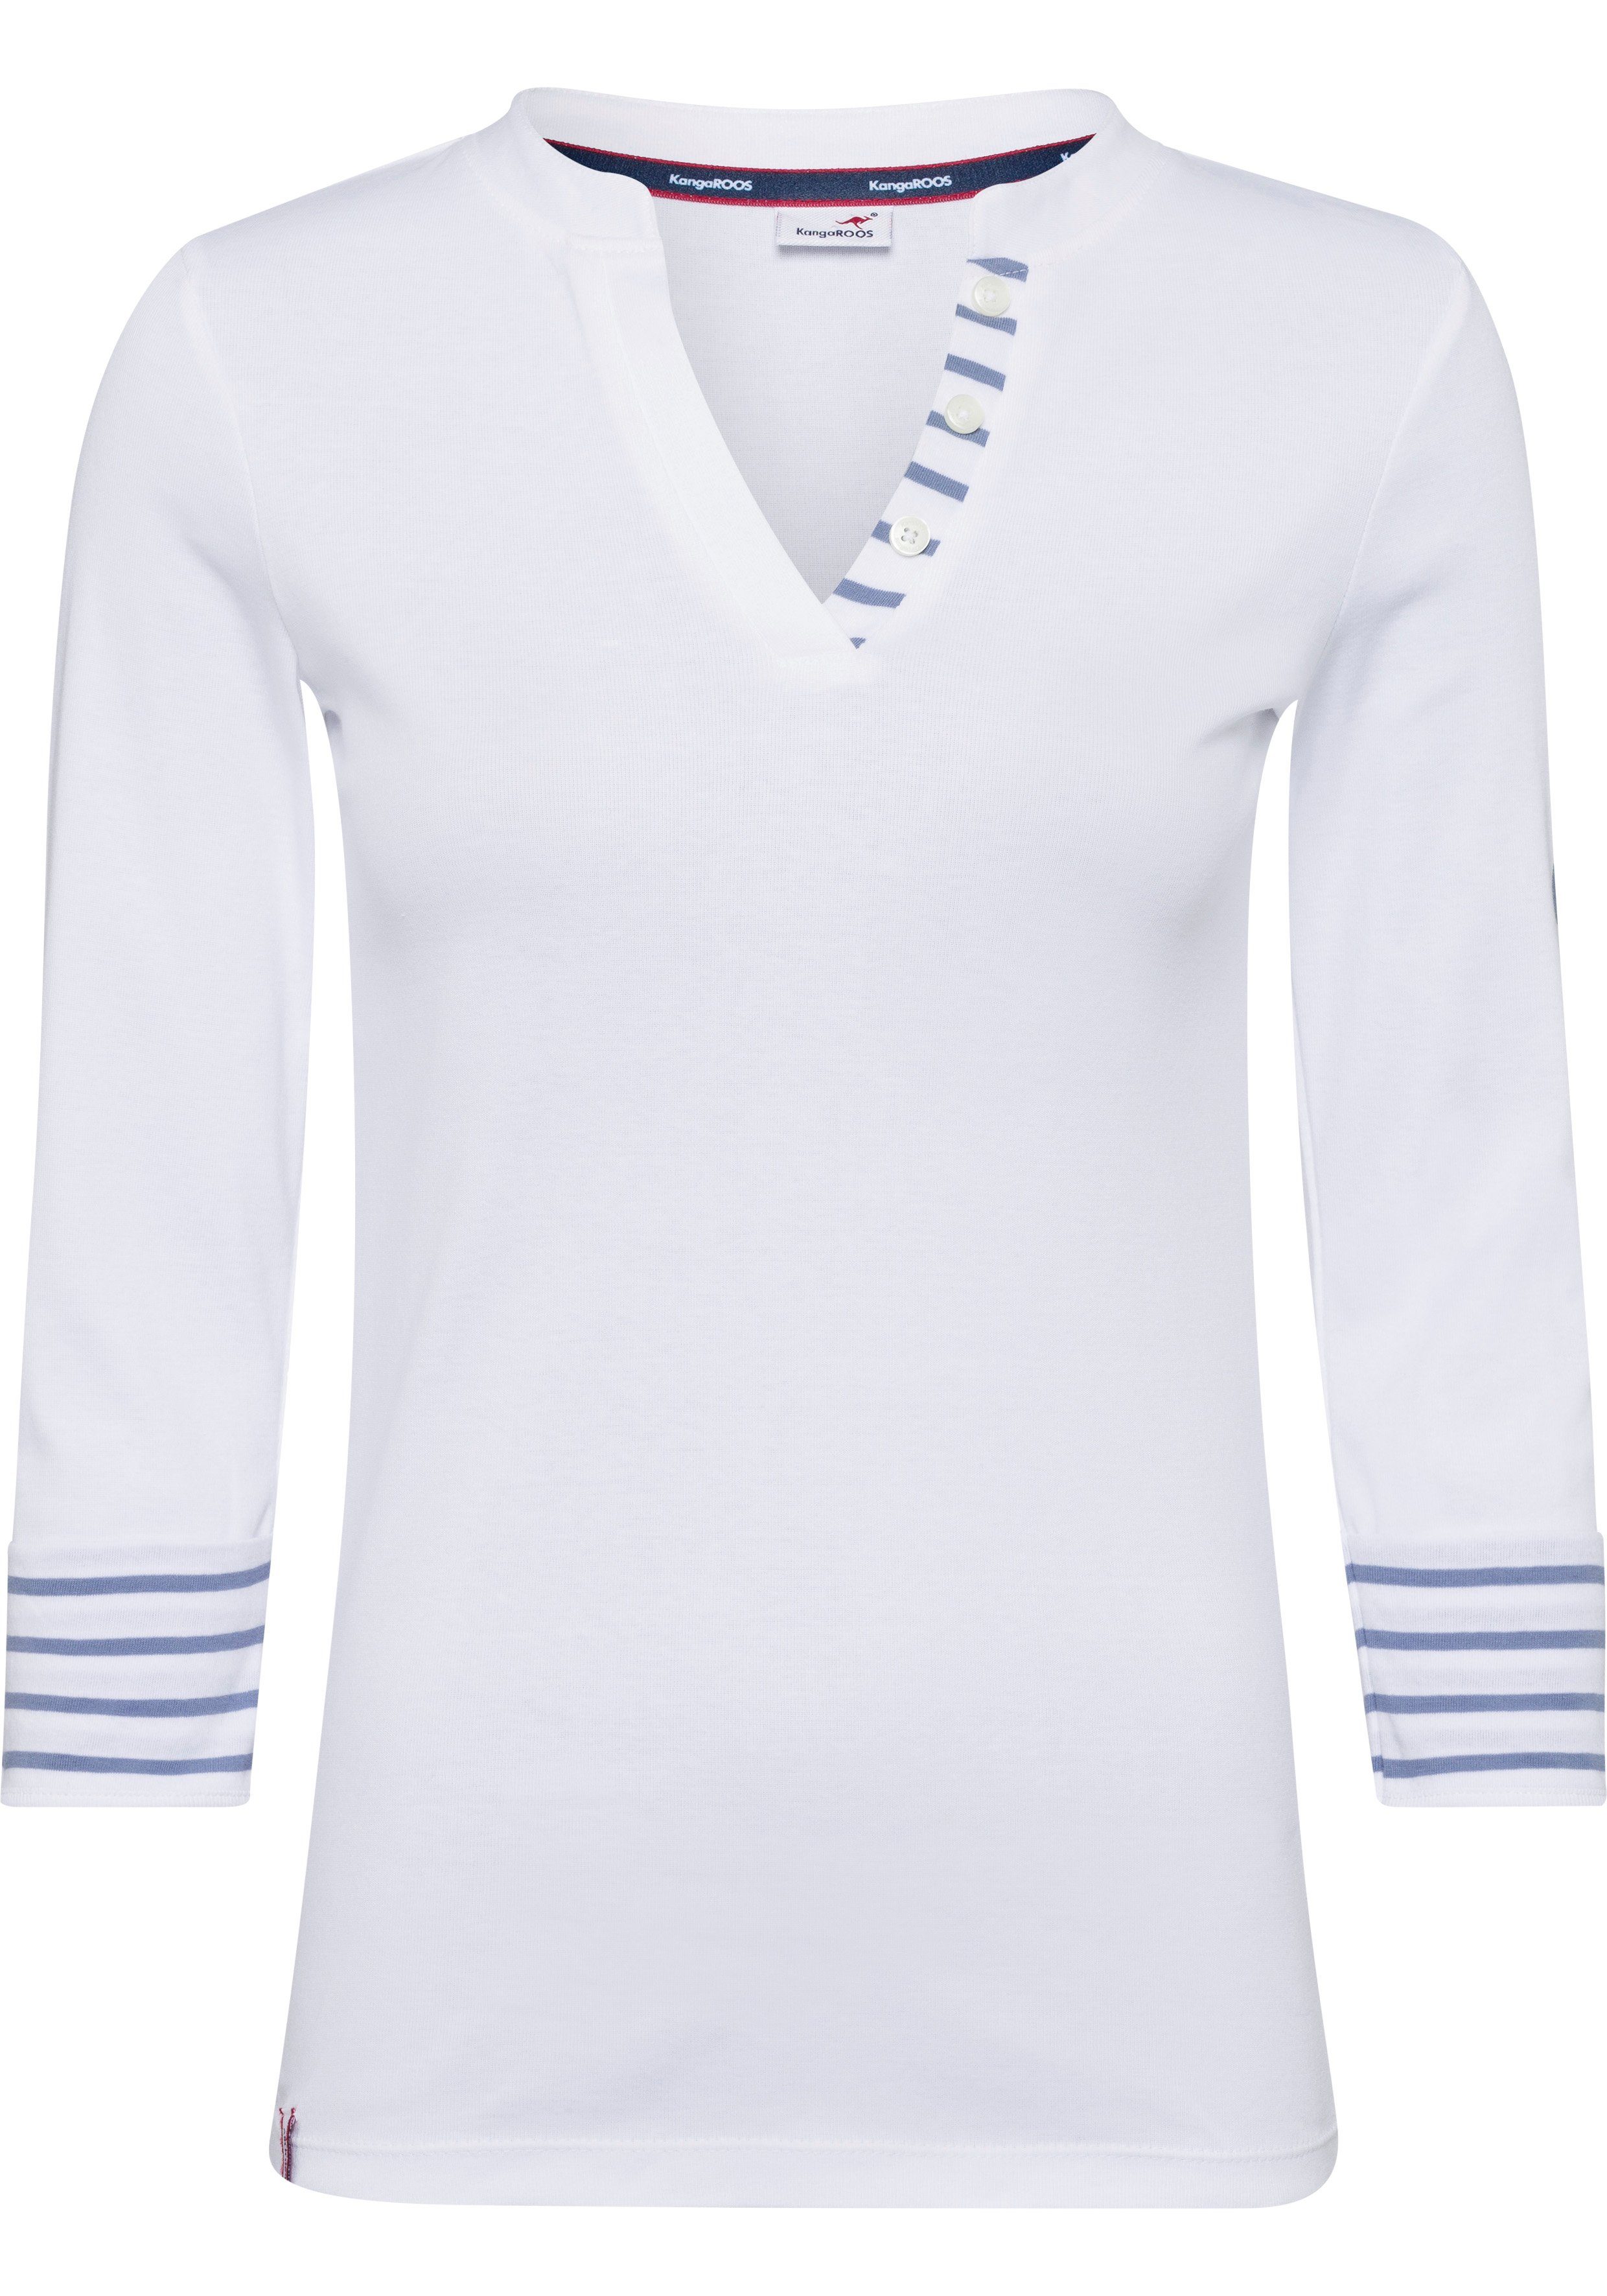 am 3/4-Arm-Shirt mit KangaROOS weiß-blau großem Markenschriftzug Arm